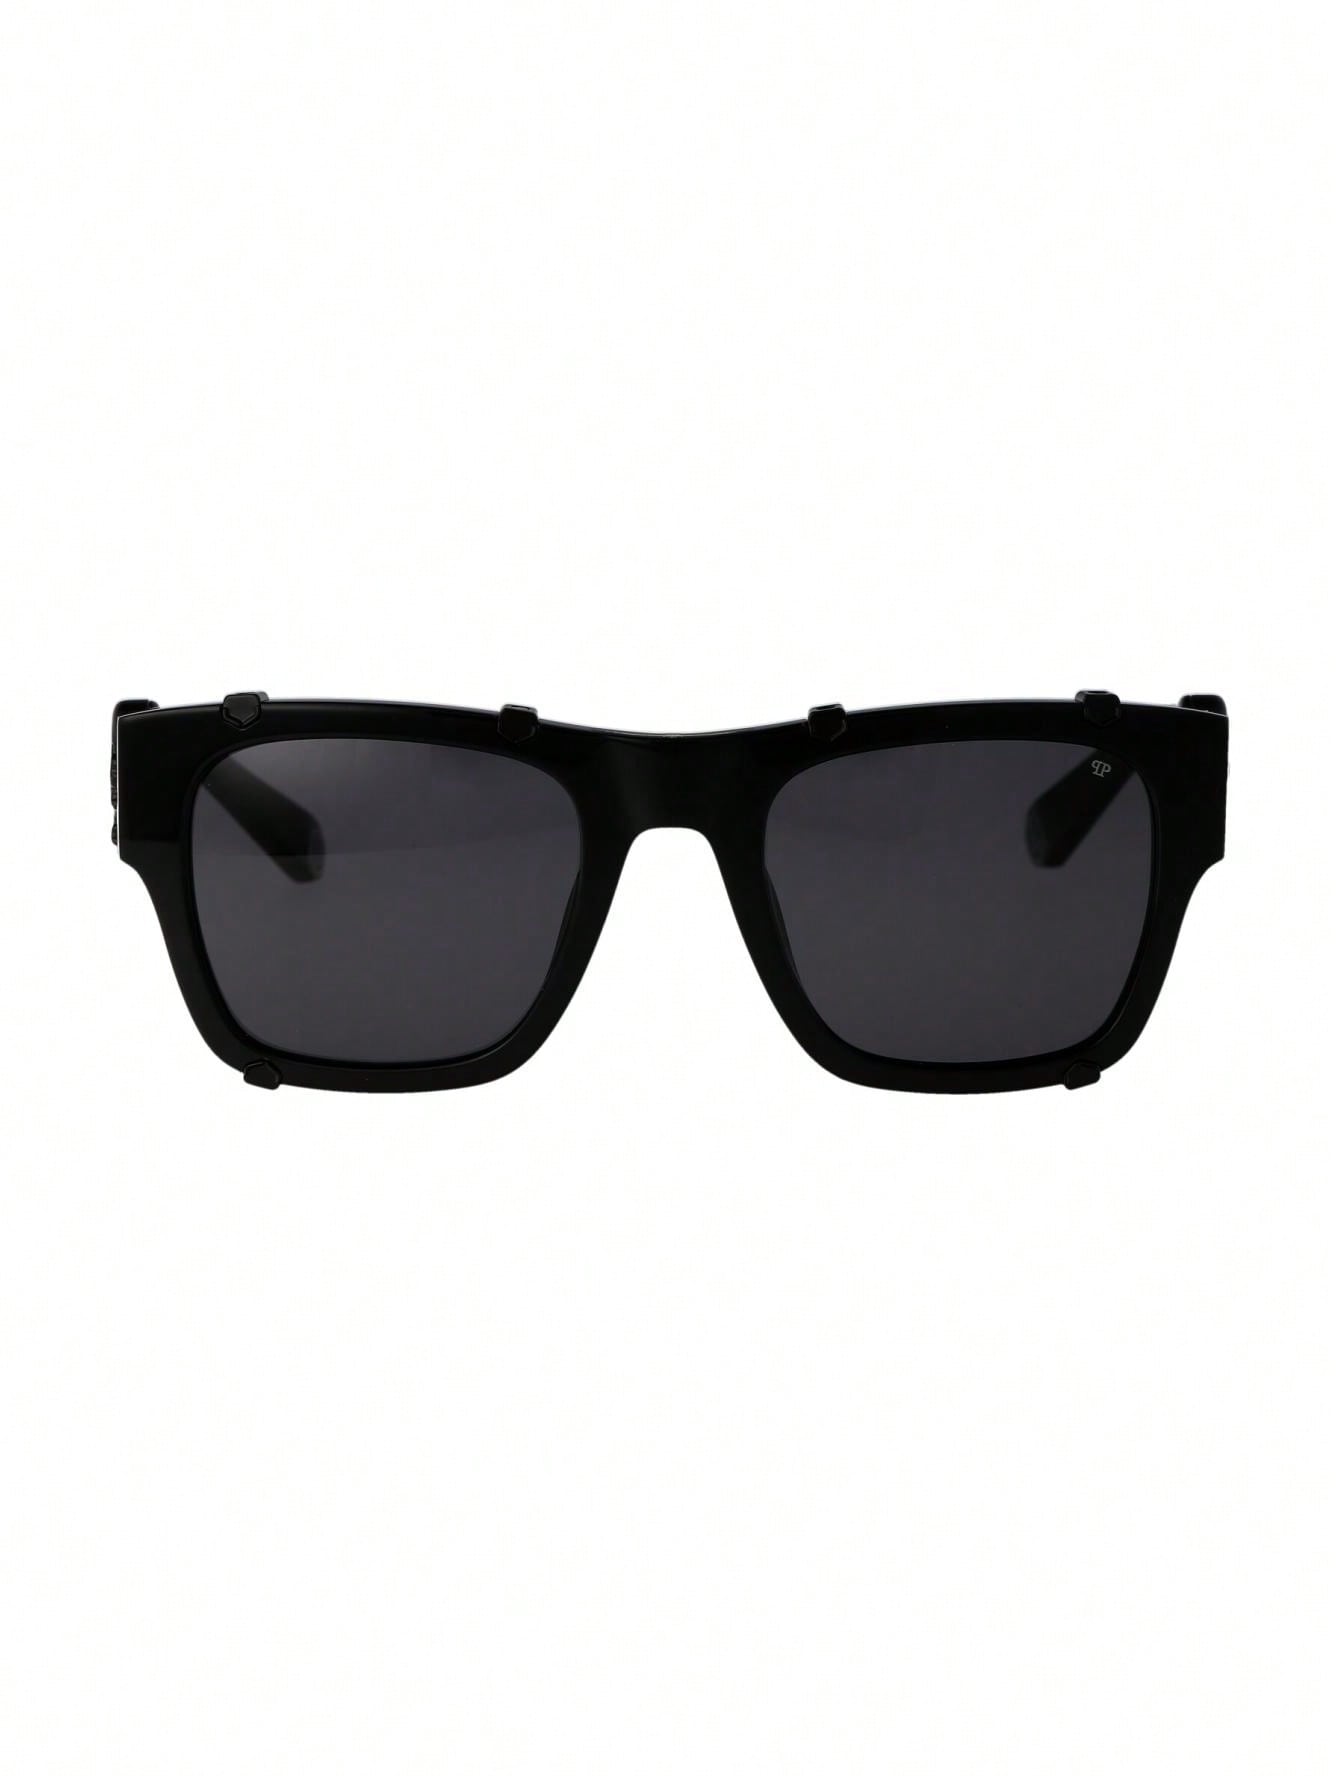 Мужские солнцезащитные очки Philipp Plein DECOR SPP042V700V, многоцветный солнцезащитные очки philipp plein 006m 890x